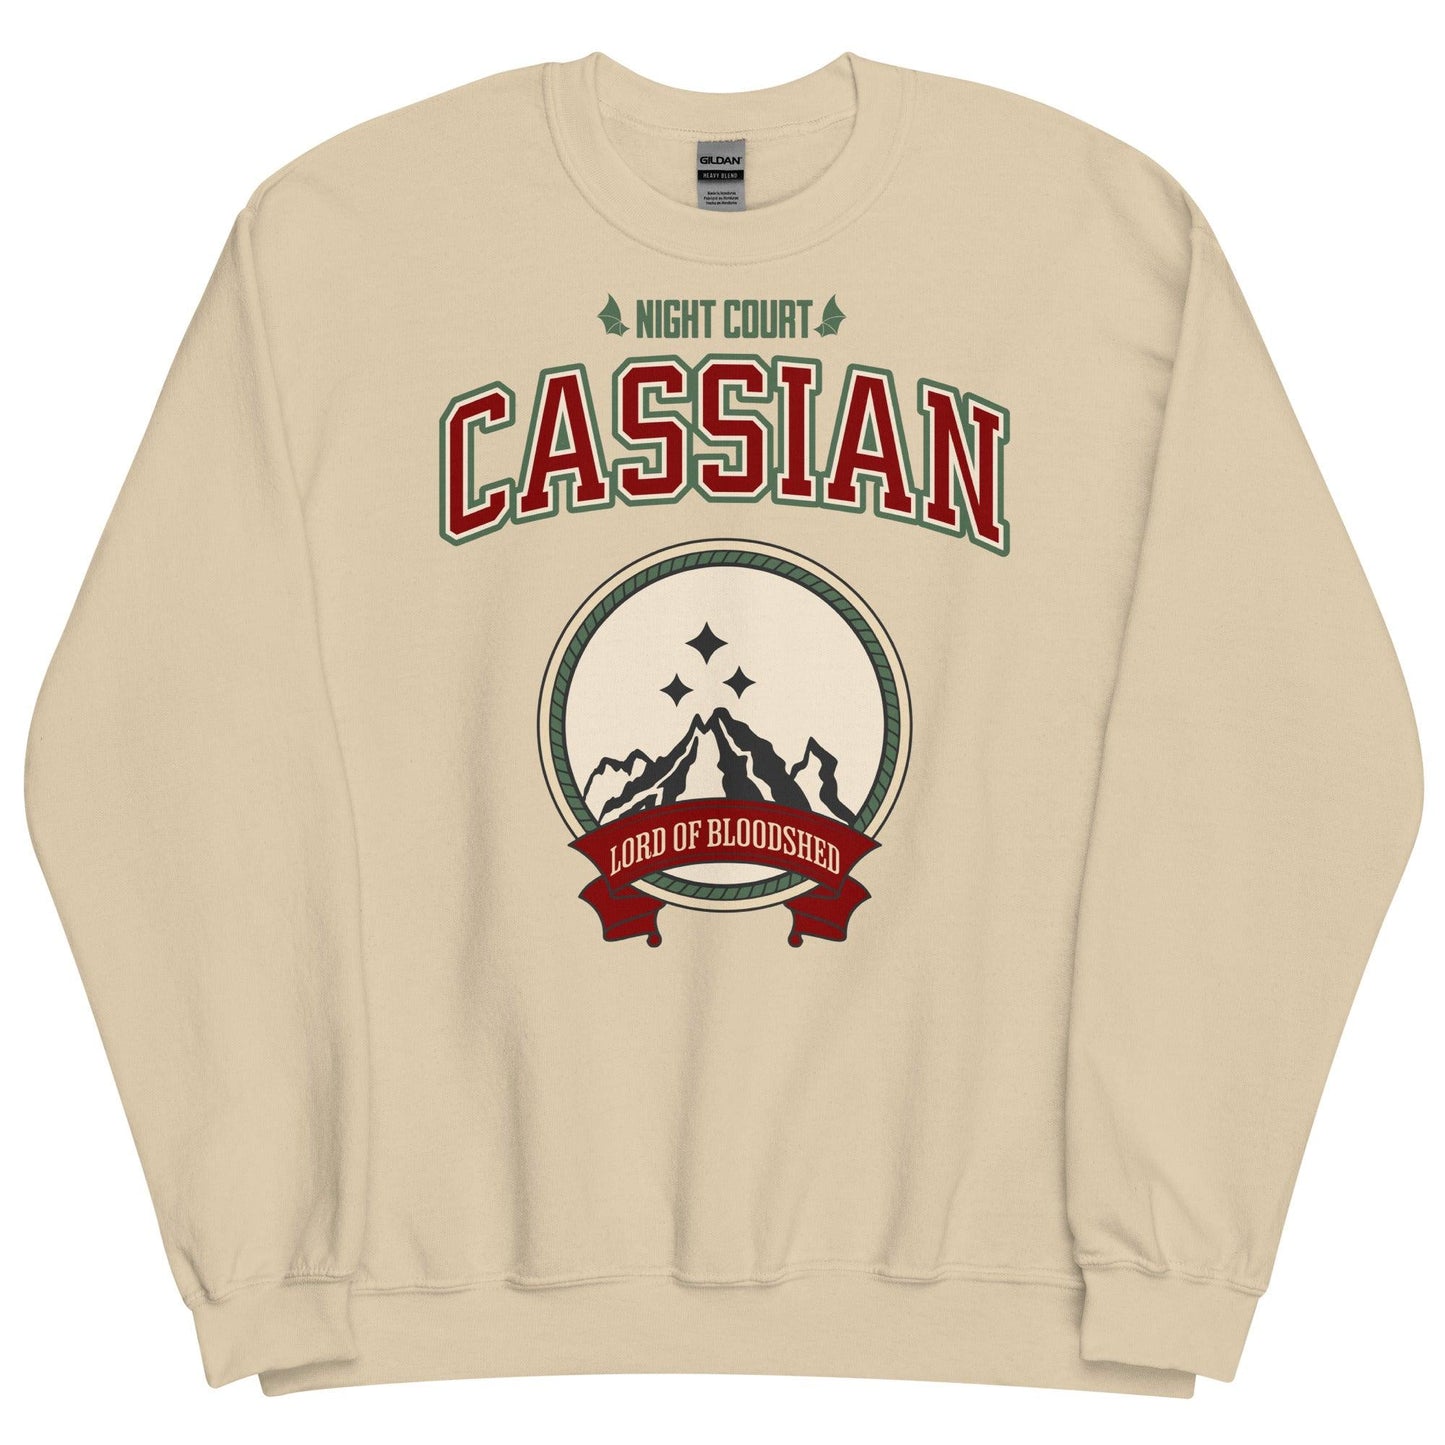 Cassian Sweatshirt - The Bean Workshop - a court of thorns and roses, acotar, feyre archeron, rhysand, sarah j maas, sweatshirt